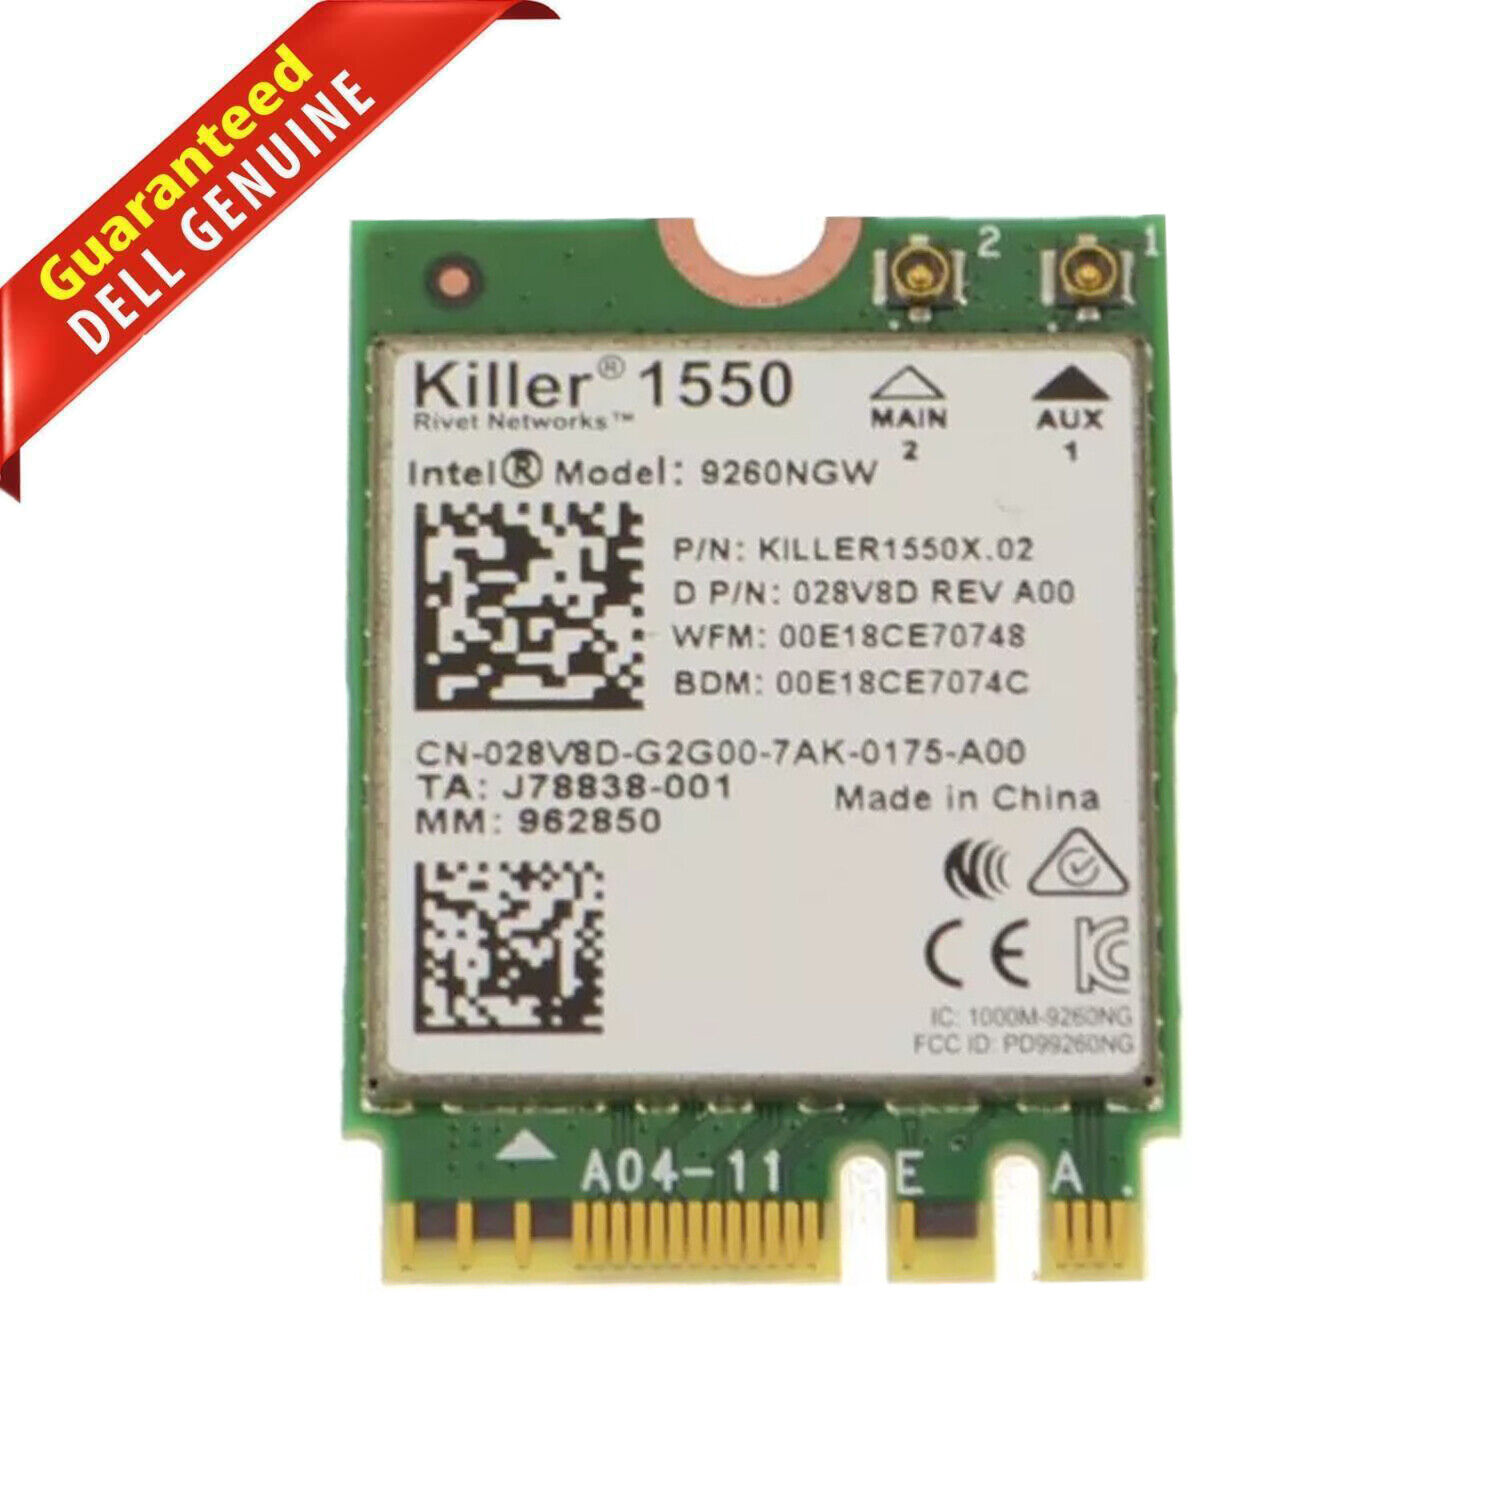 Dell Alienware 17 R5 Intel 9260NGW Killer 1550 Wireless Bluetooth Card 28V8D